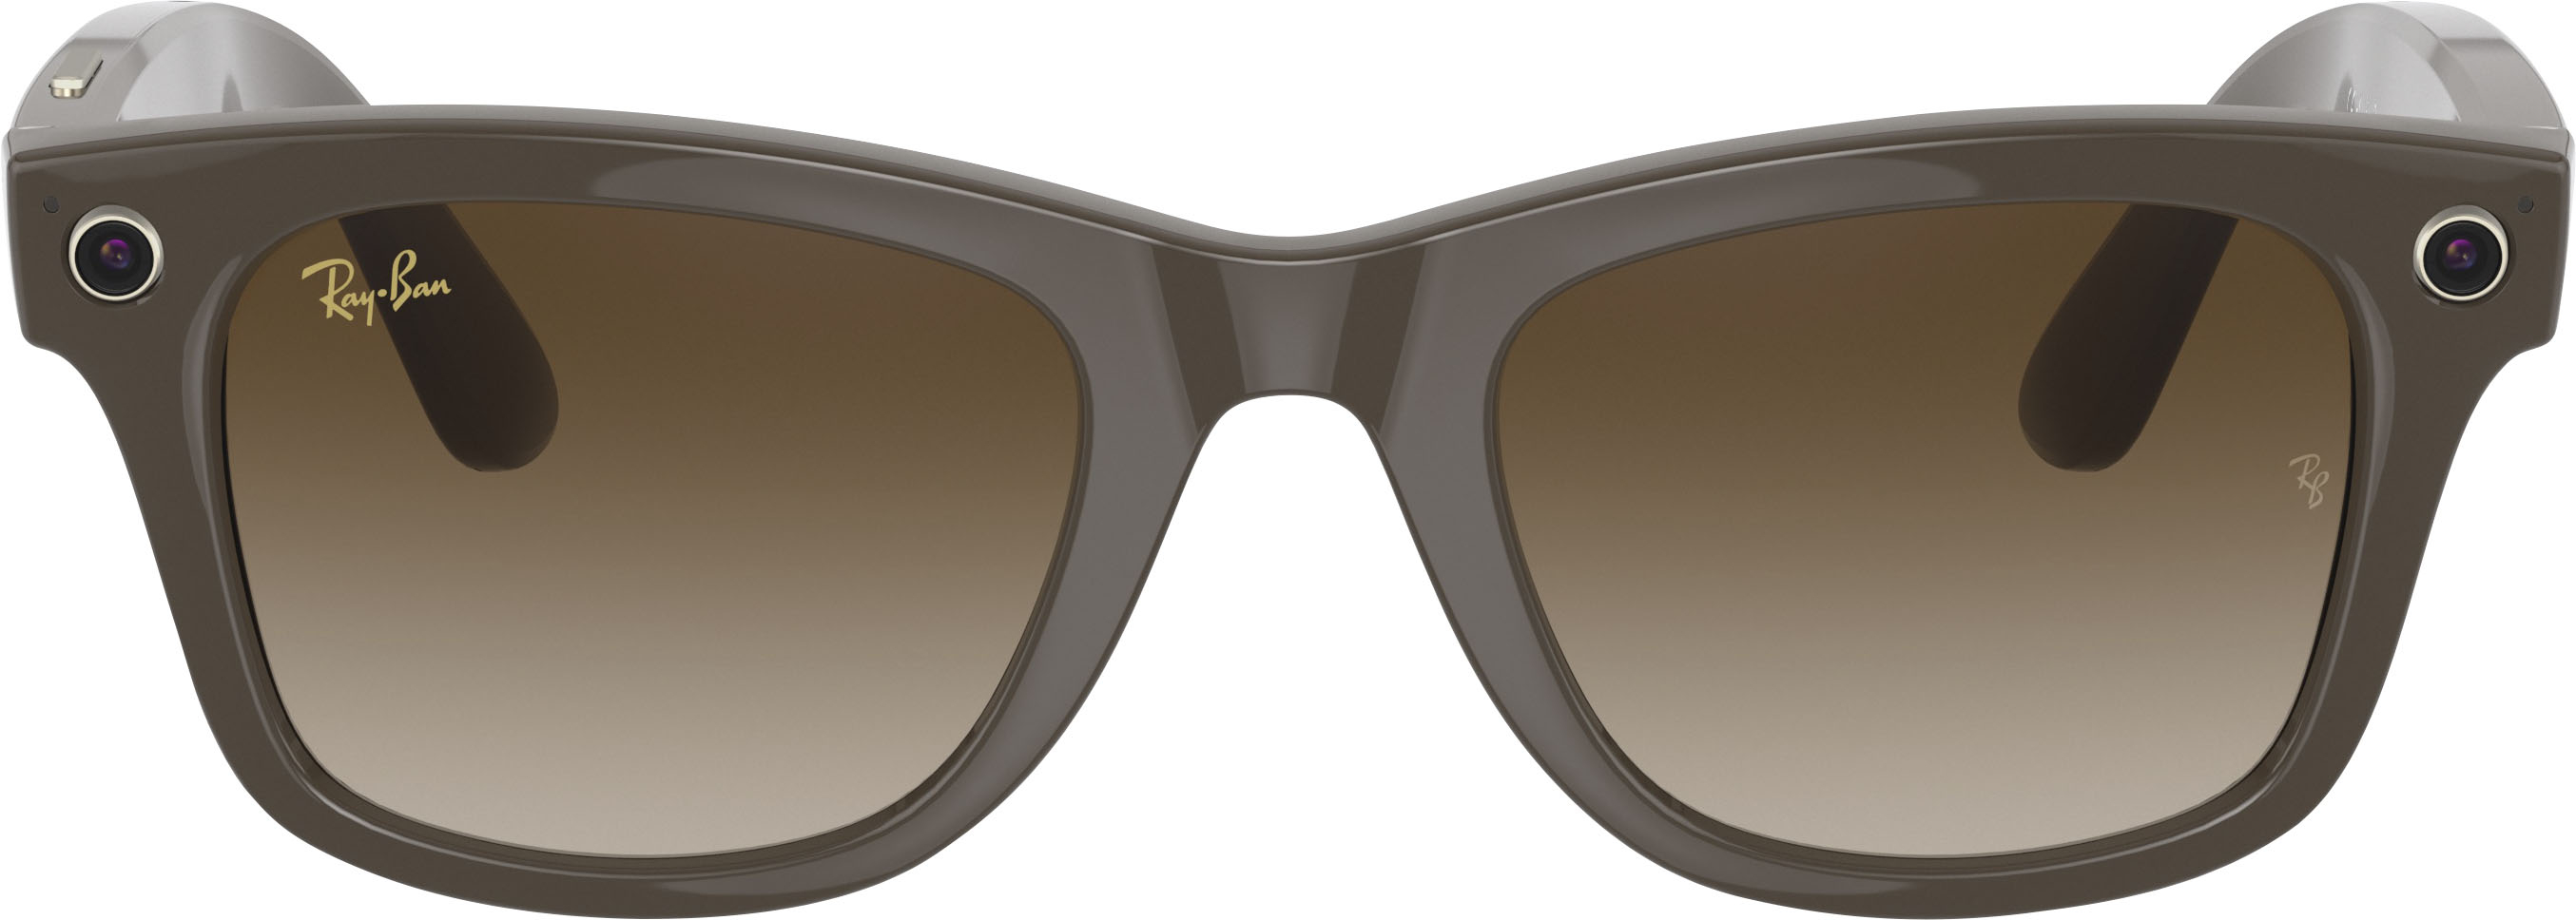 Angle View: Ray-Ban - Stories Wayfarer Smart Glasses 50mm - Shiny Brown/Brown Gradient